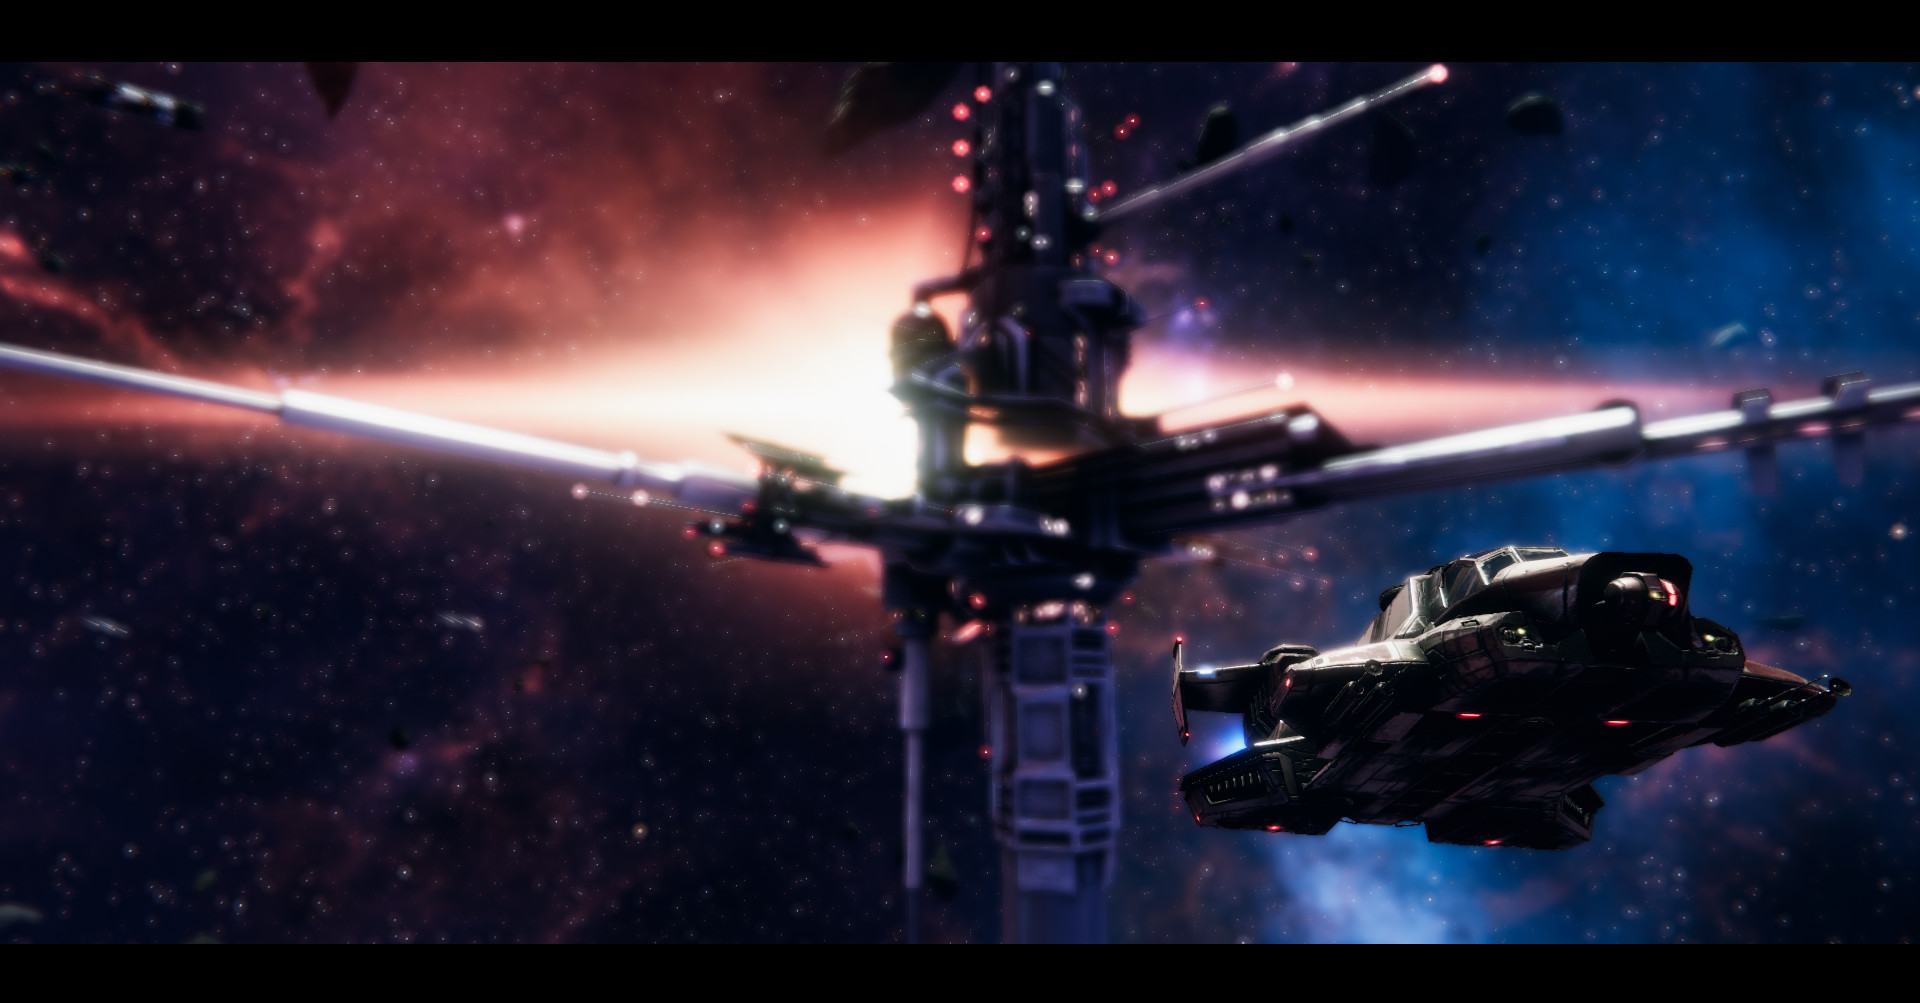 Battlestar Galactica Deadlock - Armistice DLC Steam CD Key